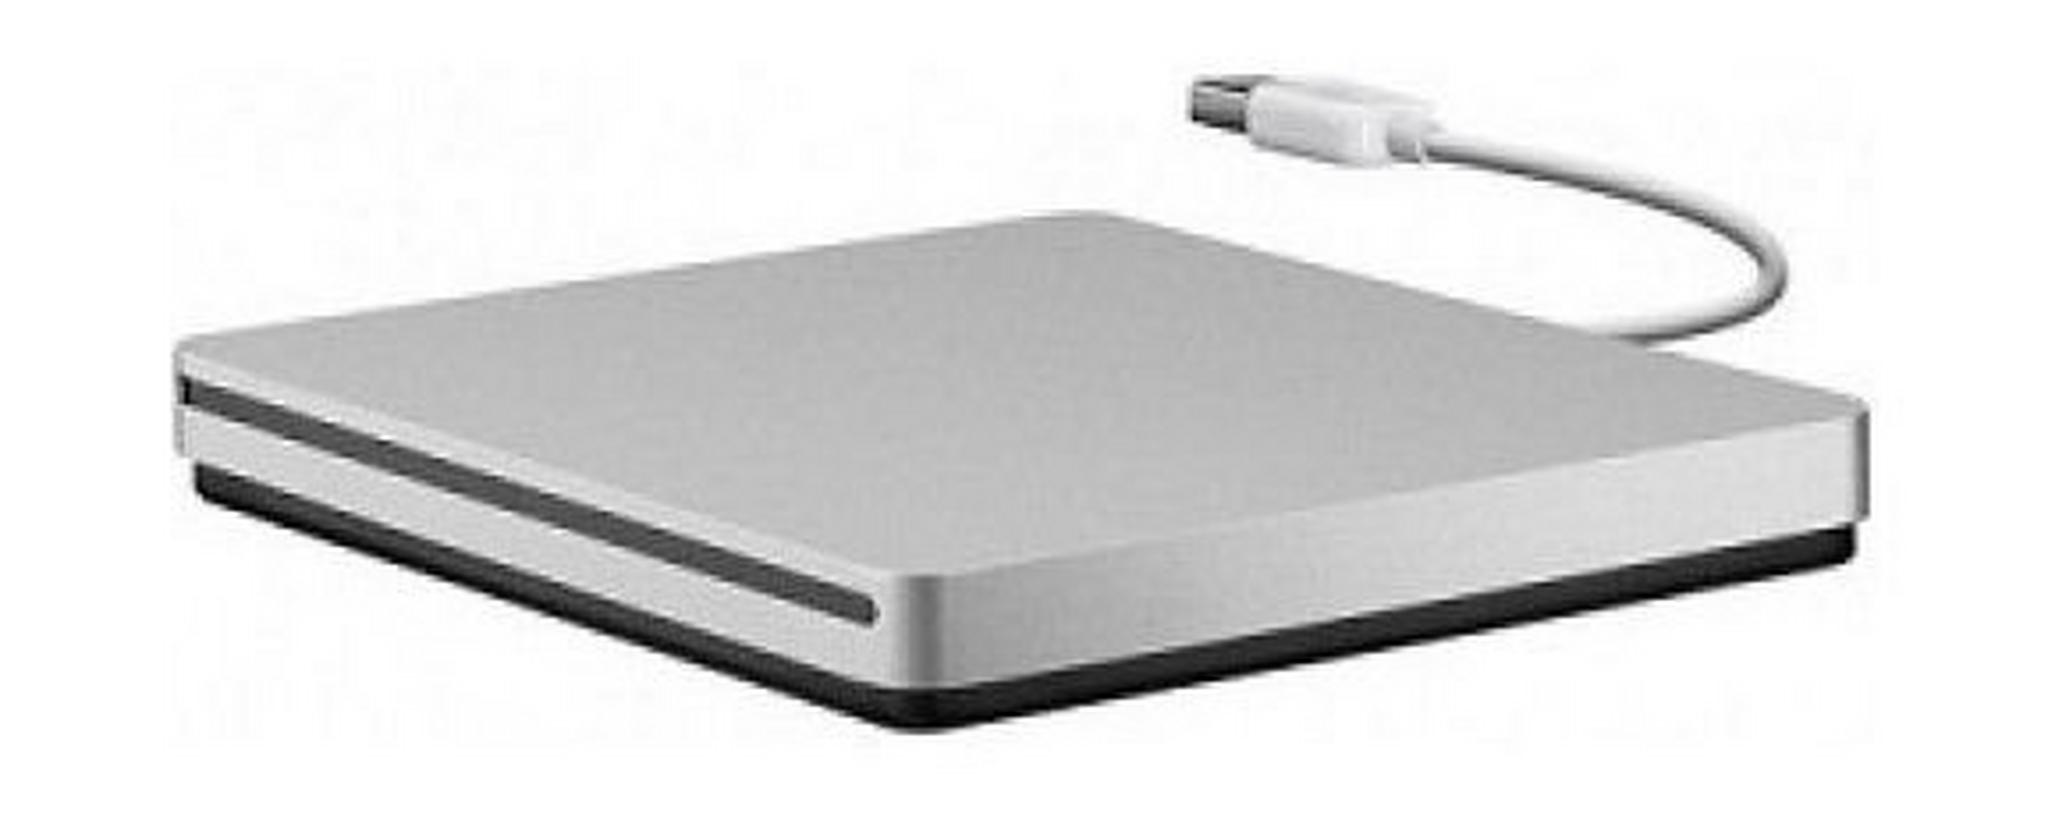 Apple USB SuperDrive (MD564) - White